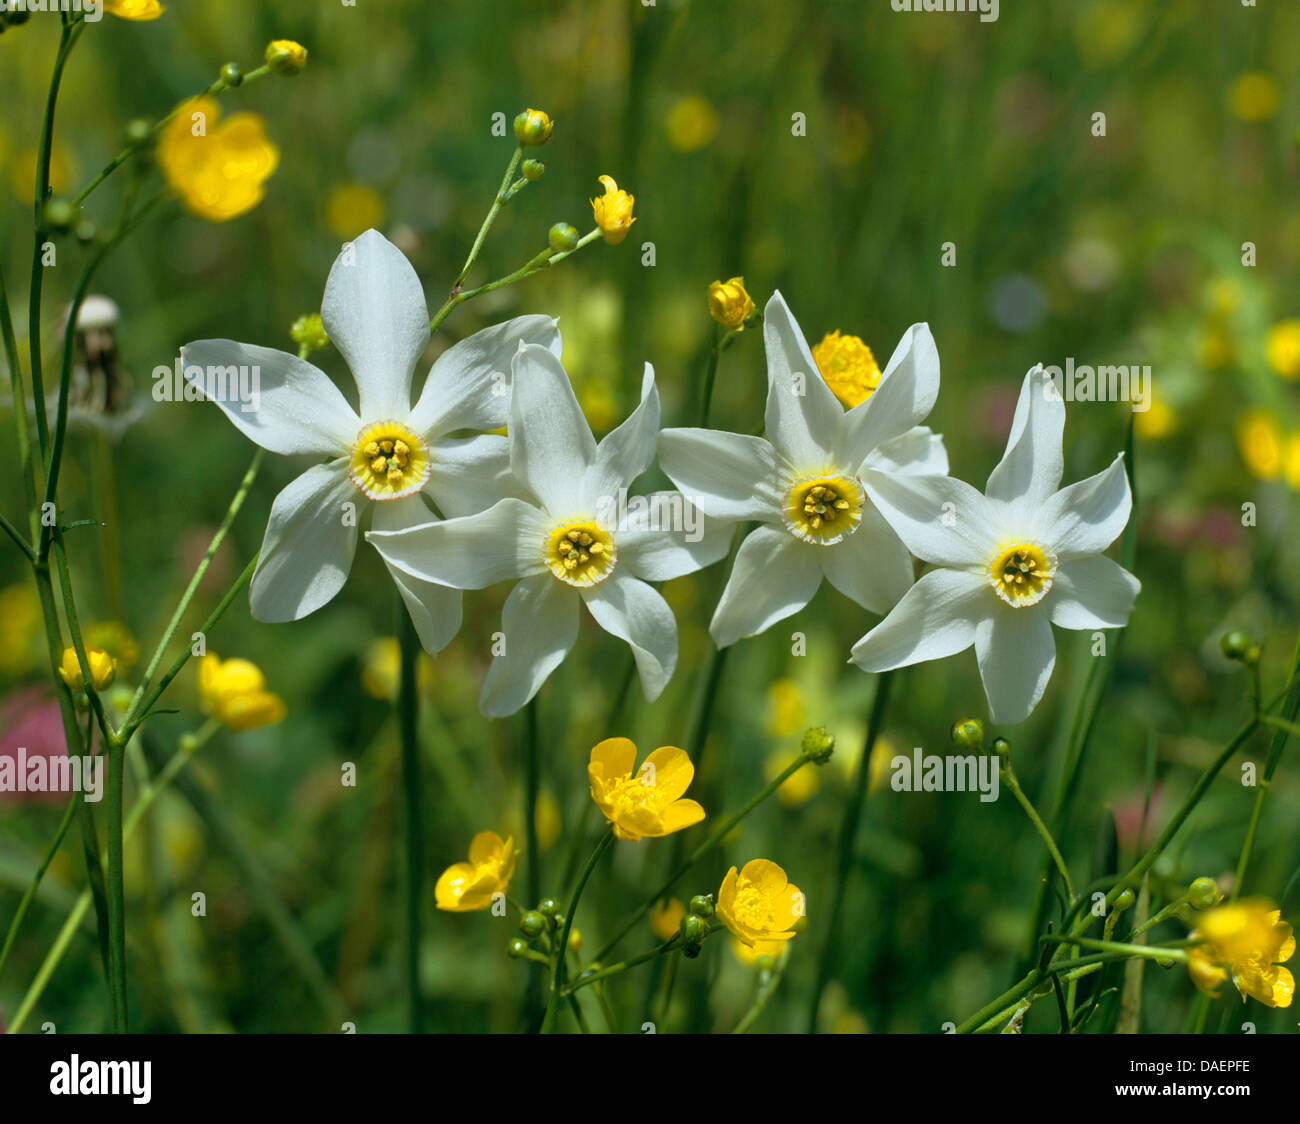 pheasant's-eye daffodil, pheasant's-eye narcissus, poet's narcissus (Narcissus radiiflorus, Narcissus poeticus ssp. radiiflorus), blooming in a meadow with buttercup, Austria Stock Photo